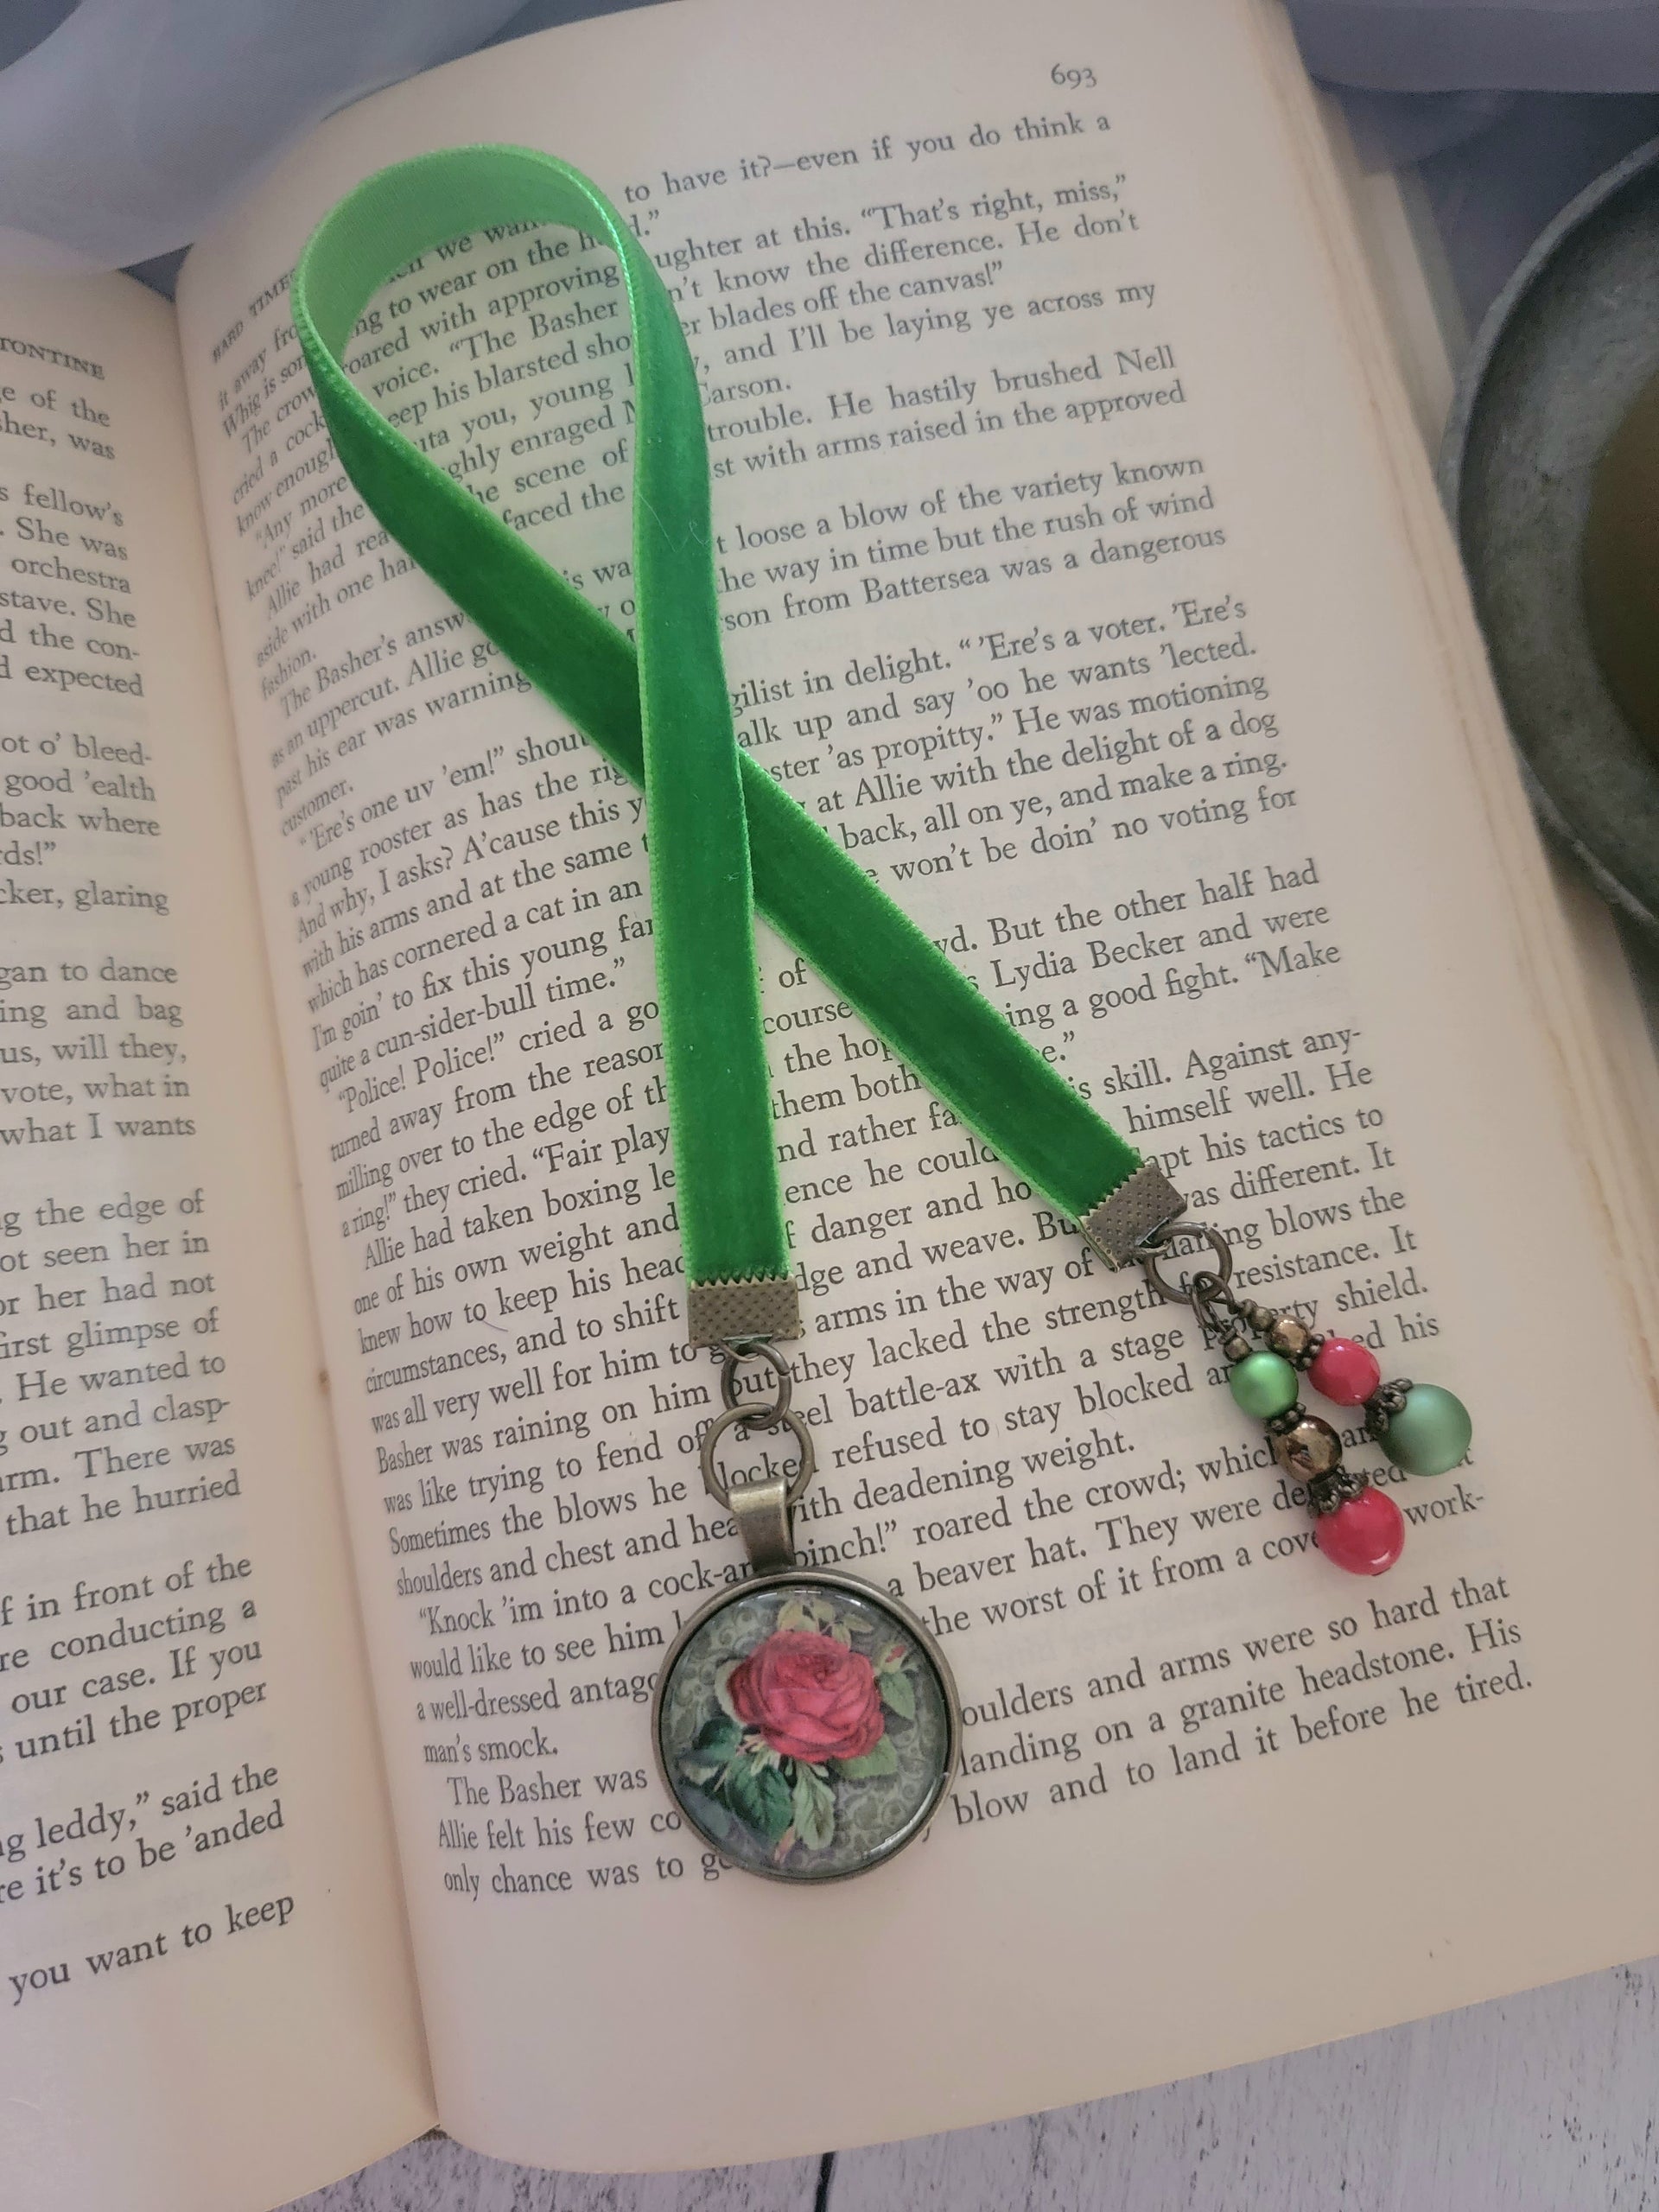 How to Make Ribbon Bookmarks, DIY Ribbon Bookmark Craft with Velvet Ribbon  - Joyfully Treasured